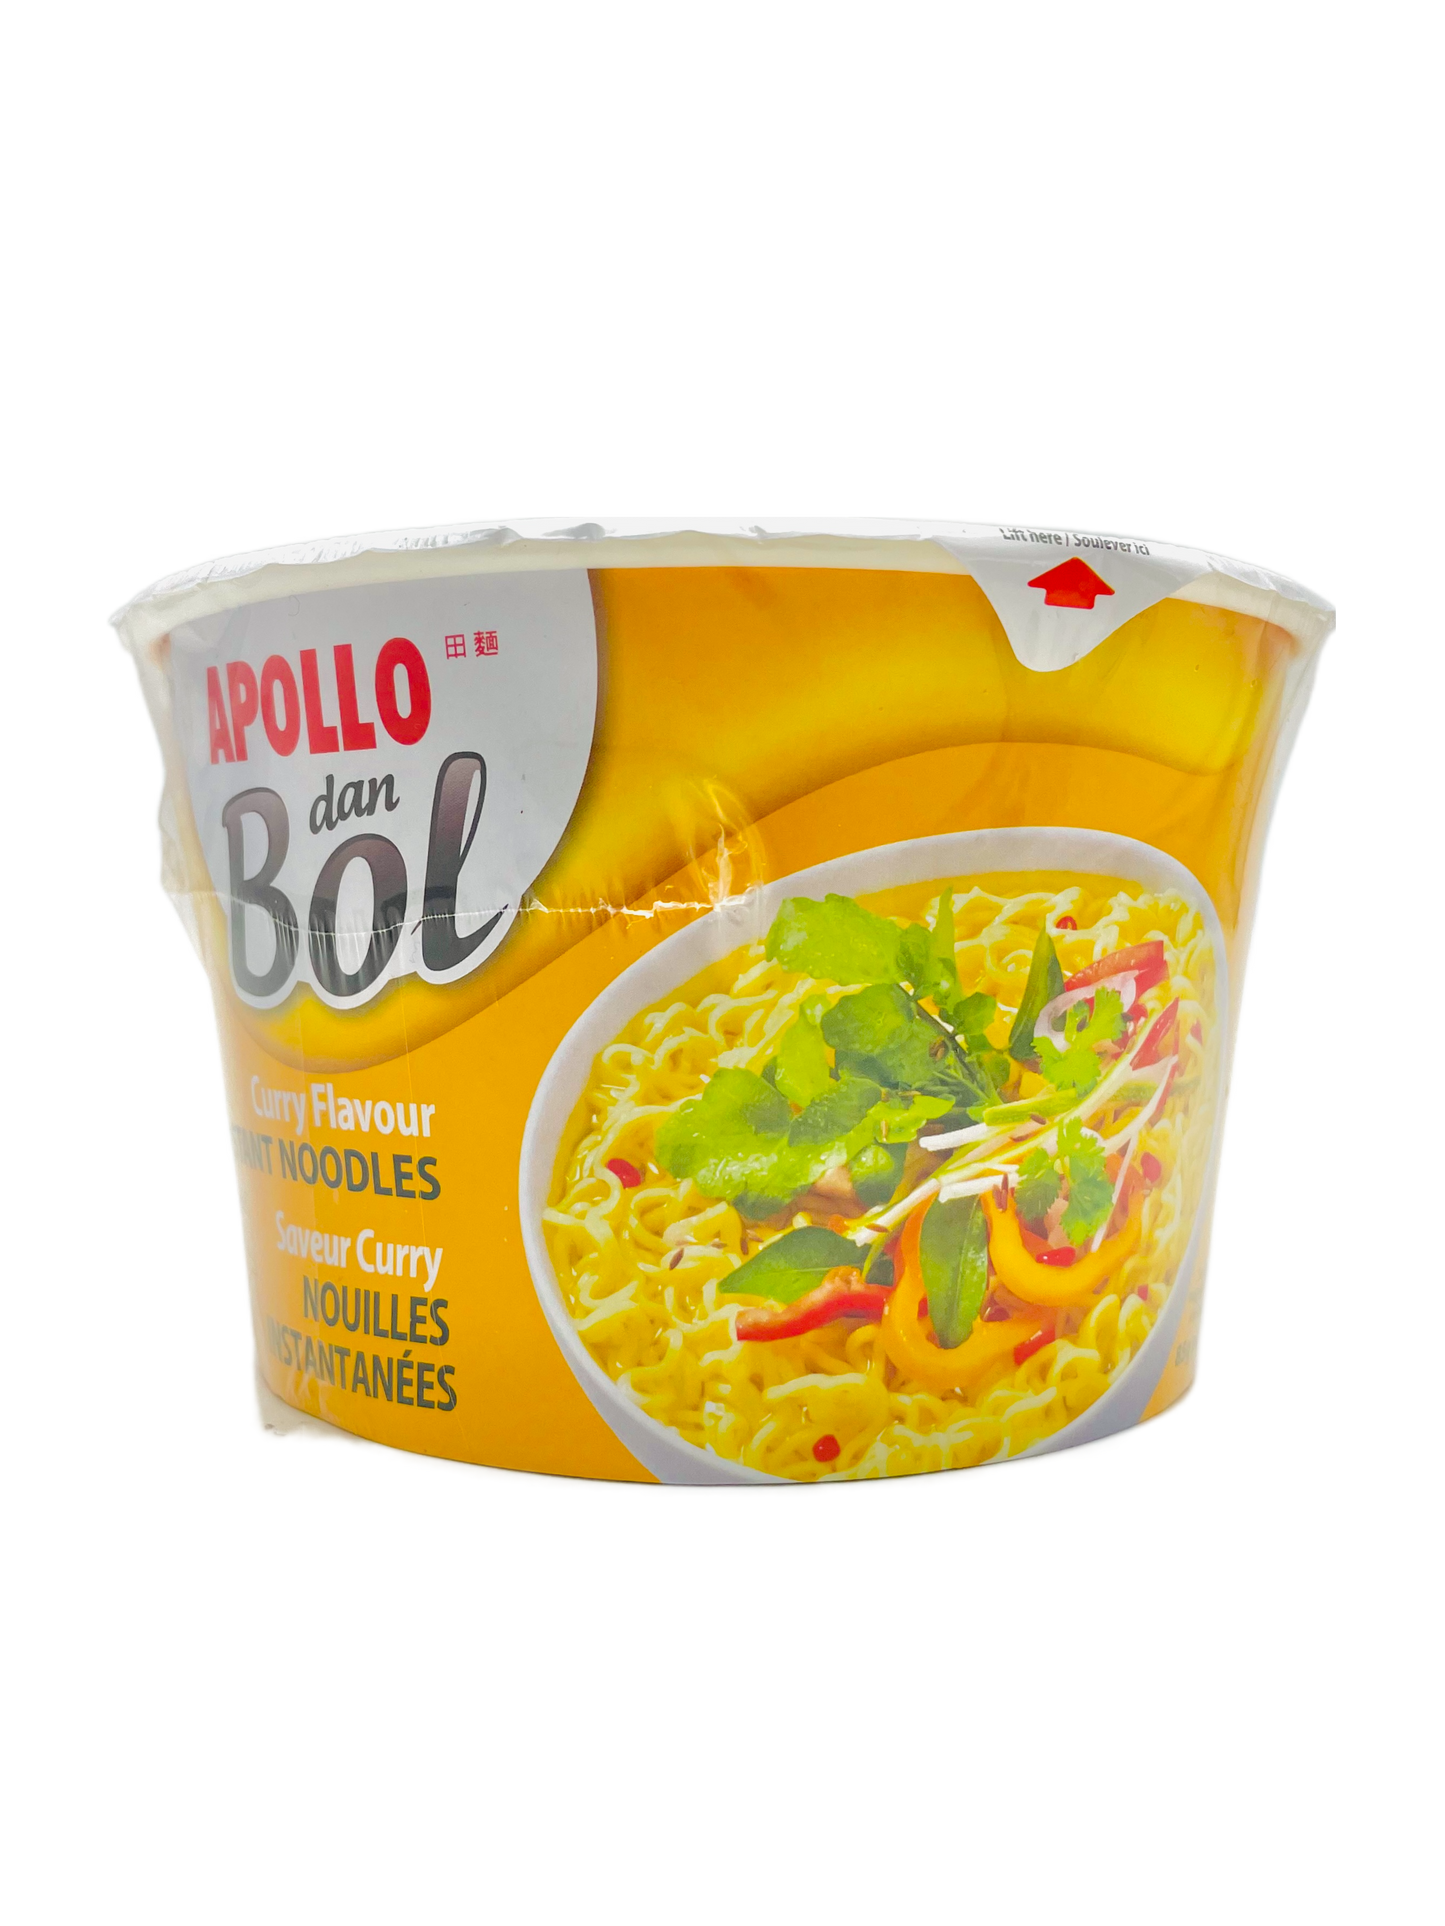 Apollo dan Bol Curry Flavour Noodles 85g